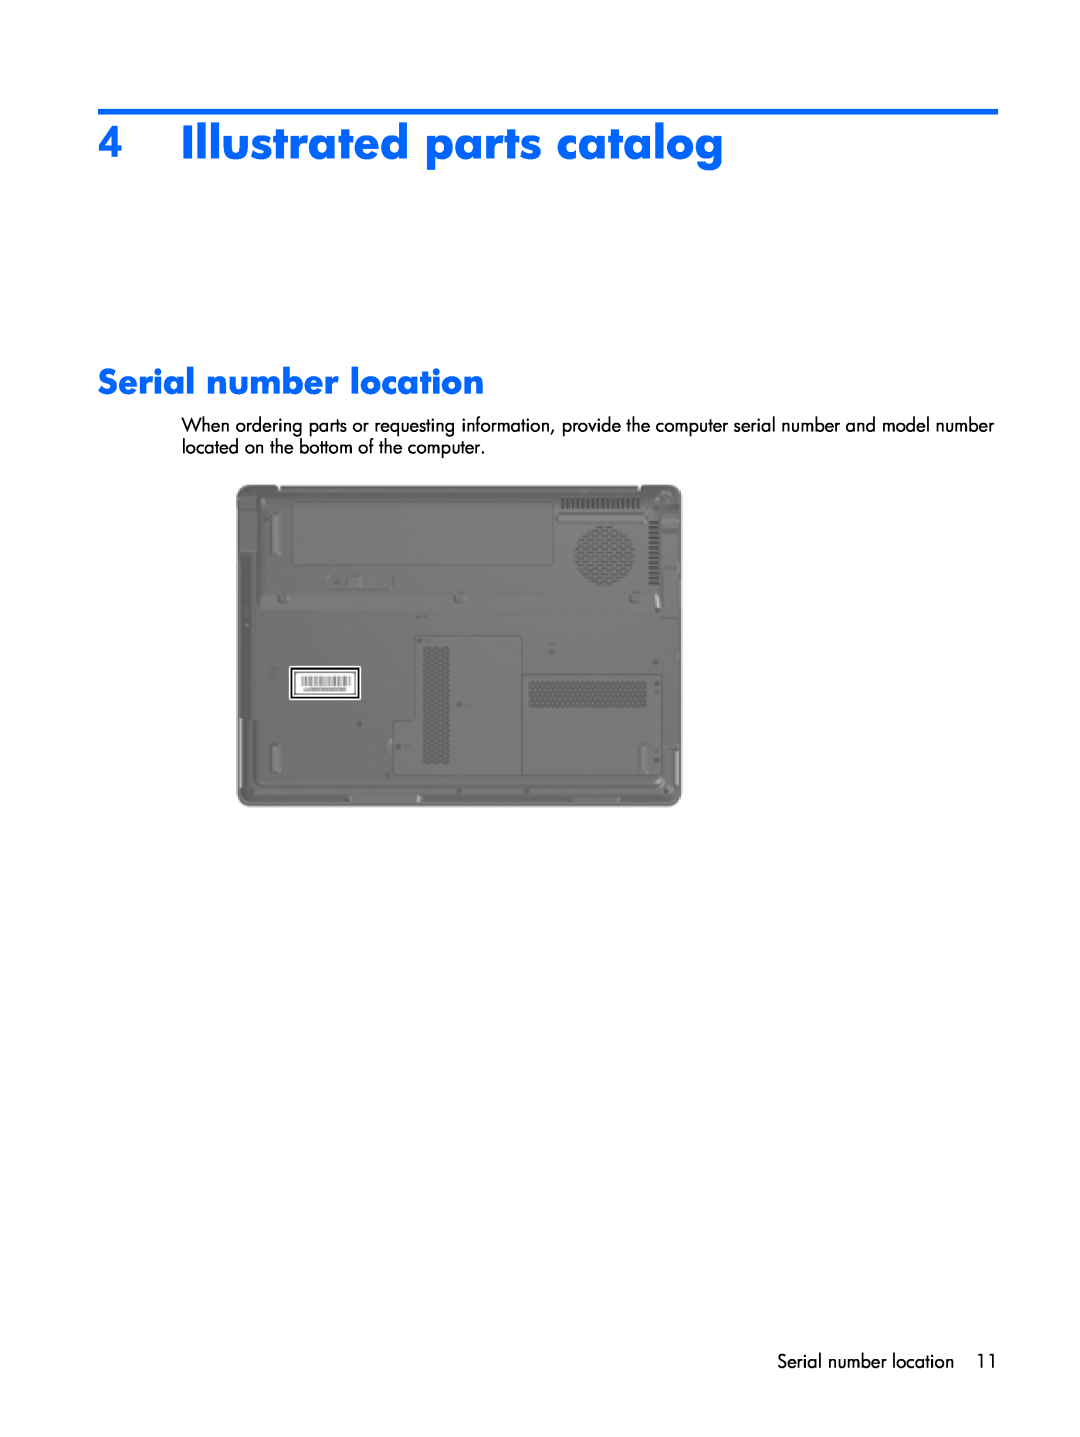 Compaq F500 manual Illustrated parts catalog, Serial number location 